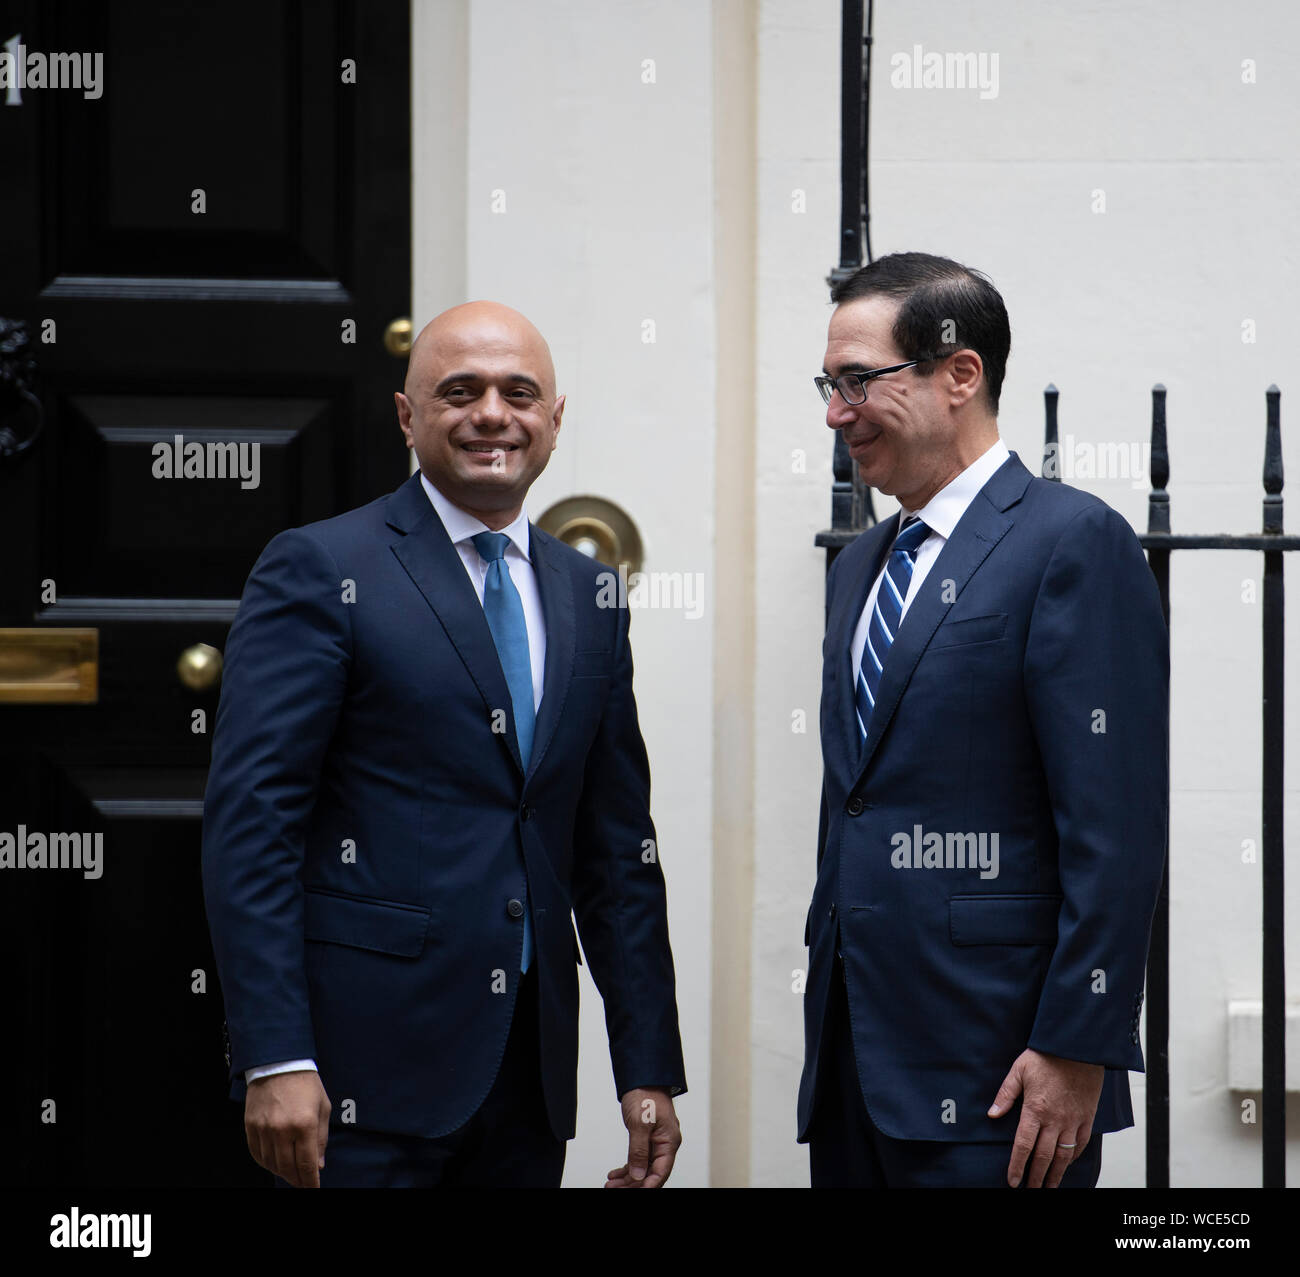 London, UK. 27th August 2019. Steven Mnuchin, US Secretary of the Treasury, arrives in Downing Street to meet Sajid Javid. Credit: Malcolm Park/Alamy Stock Photo